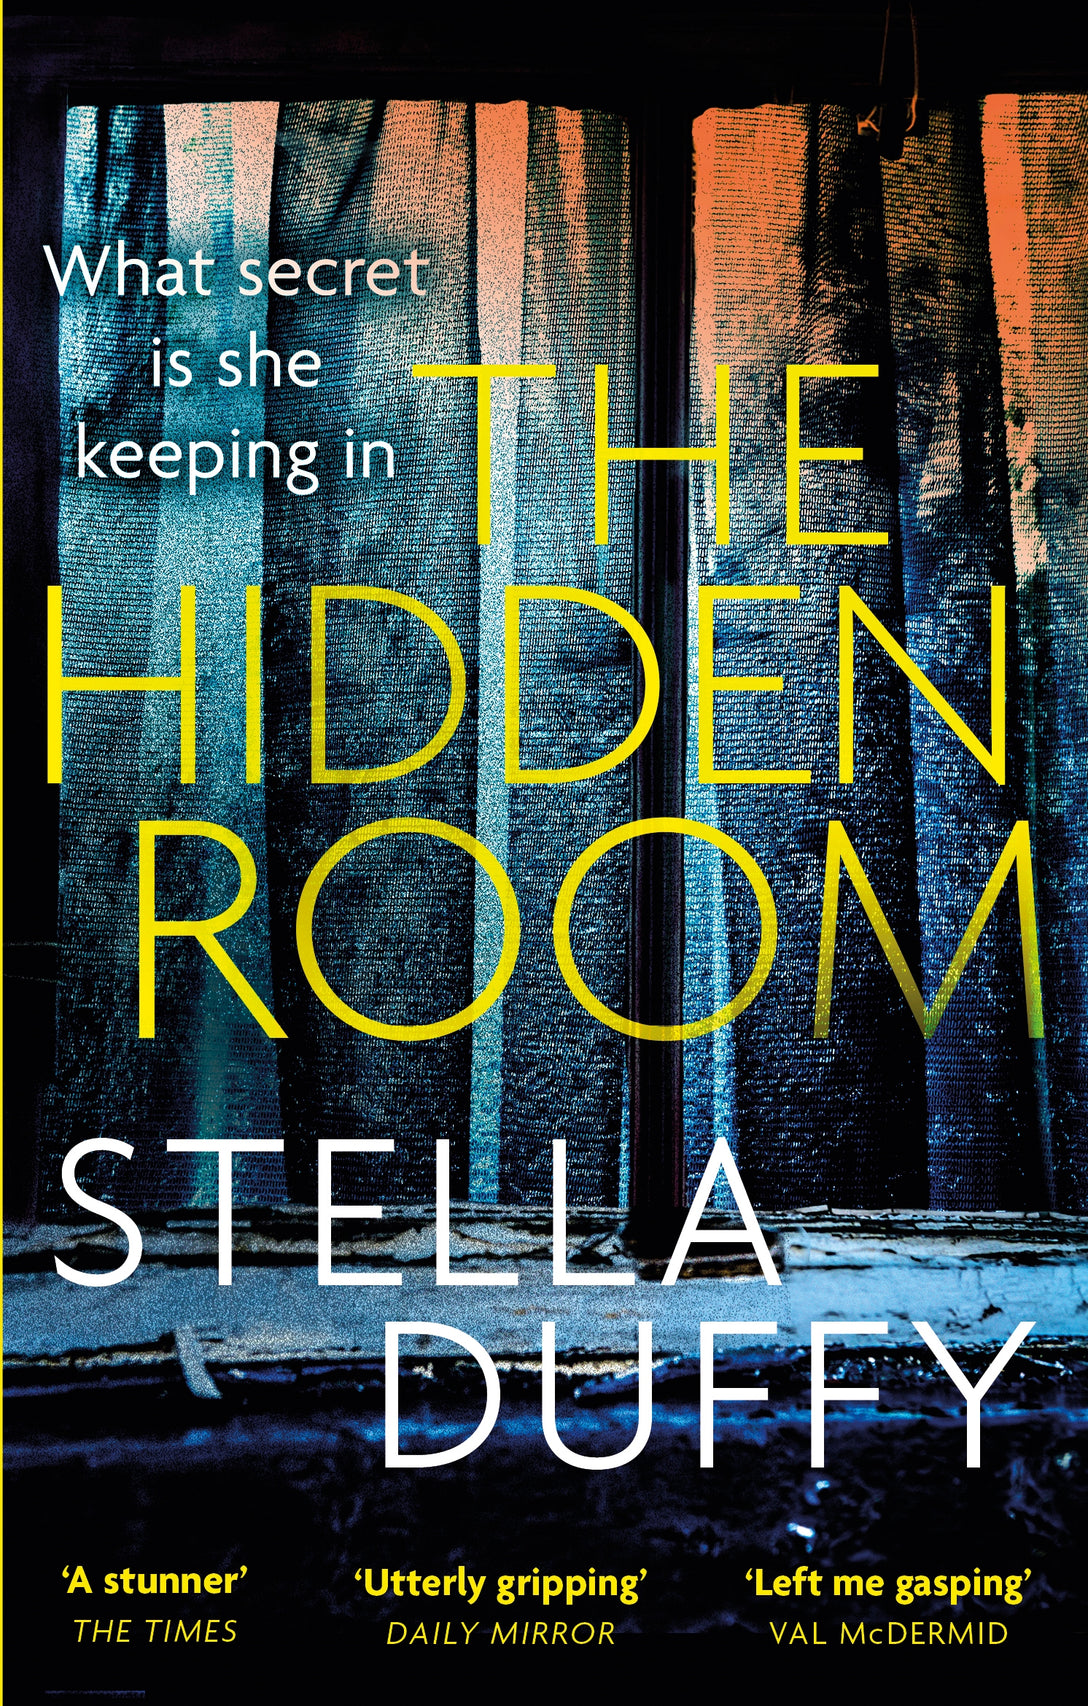 The Hidden Room by Stella Duffy